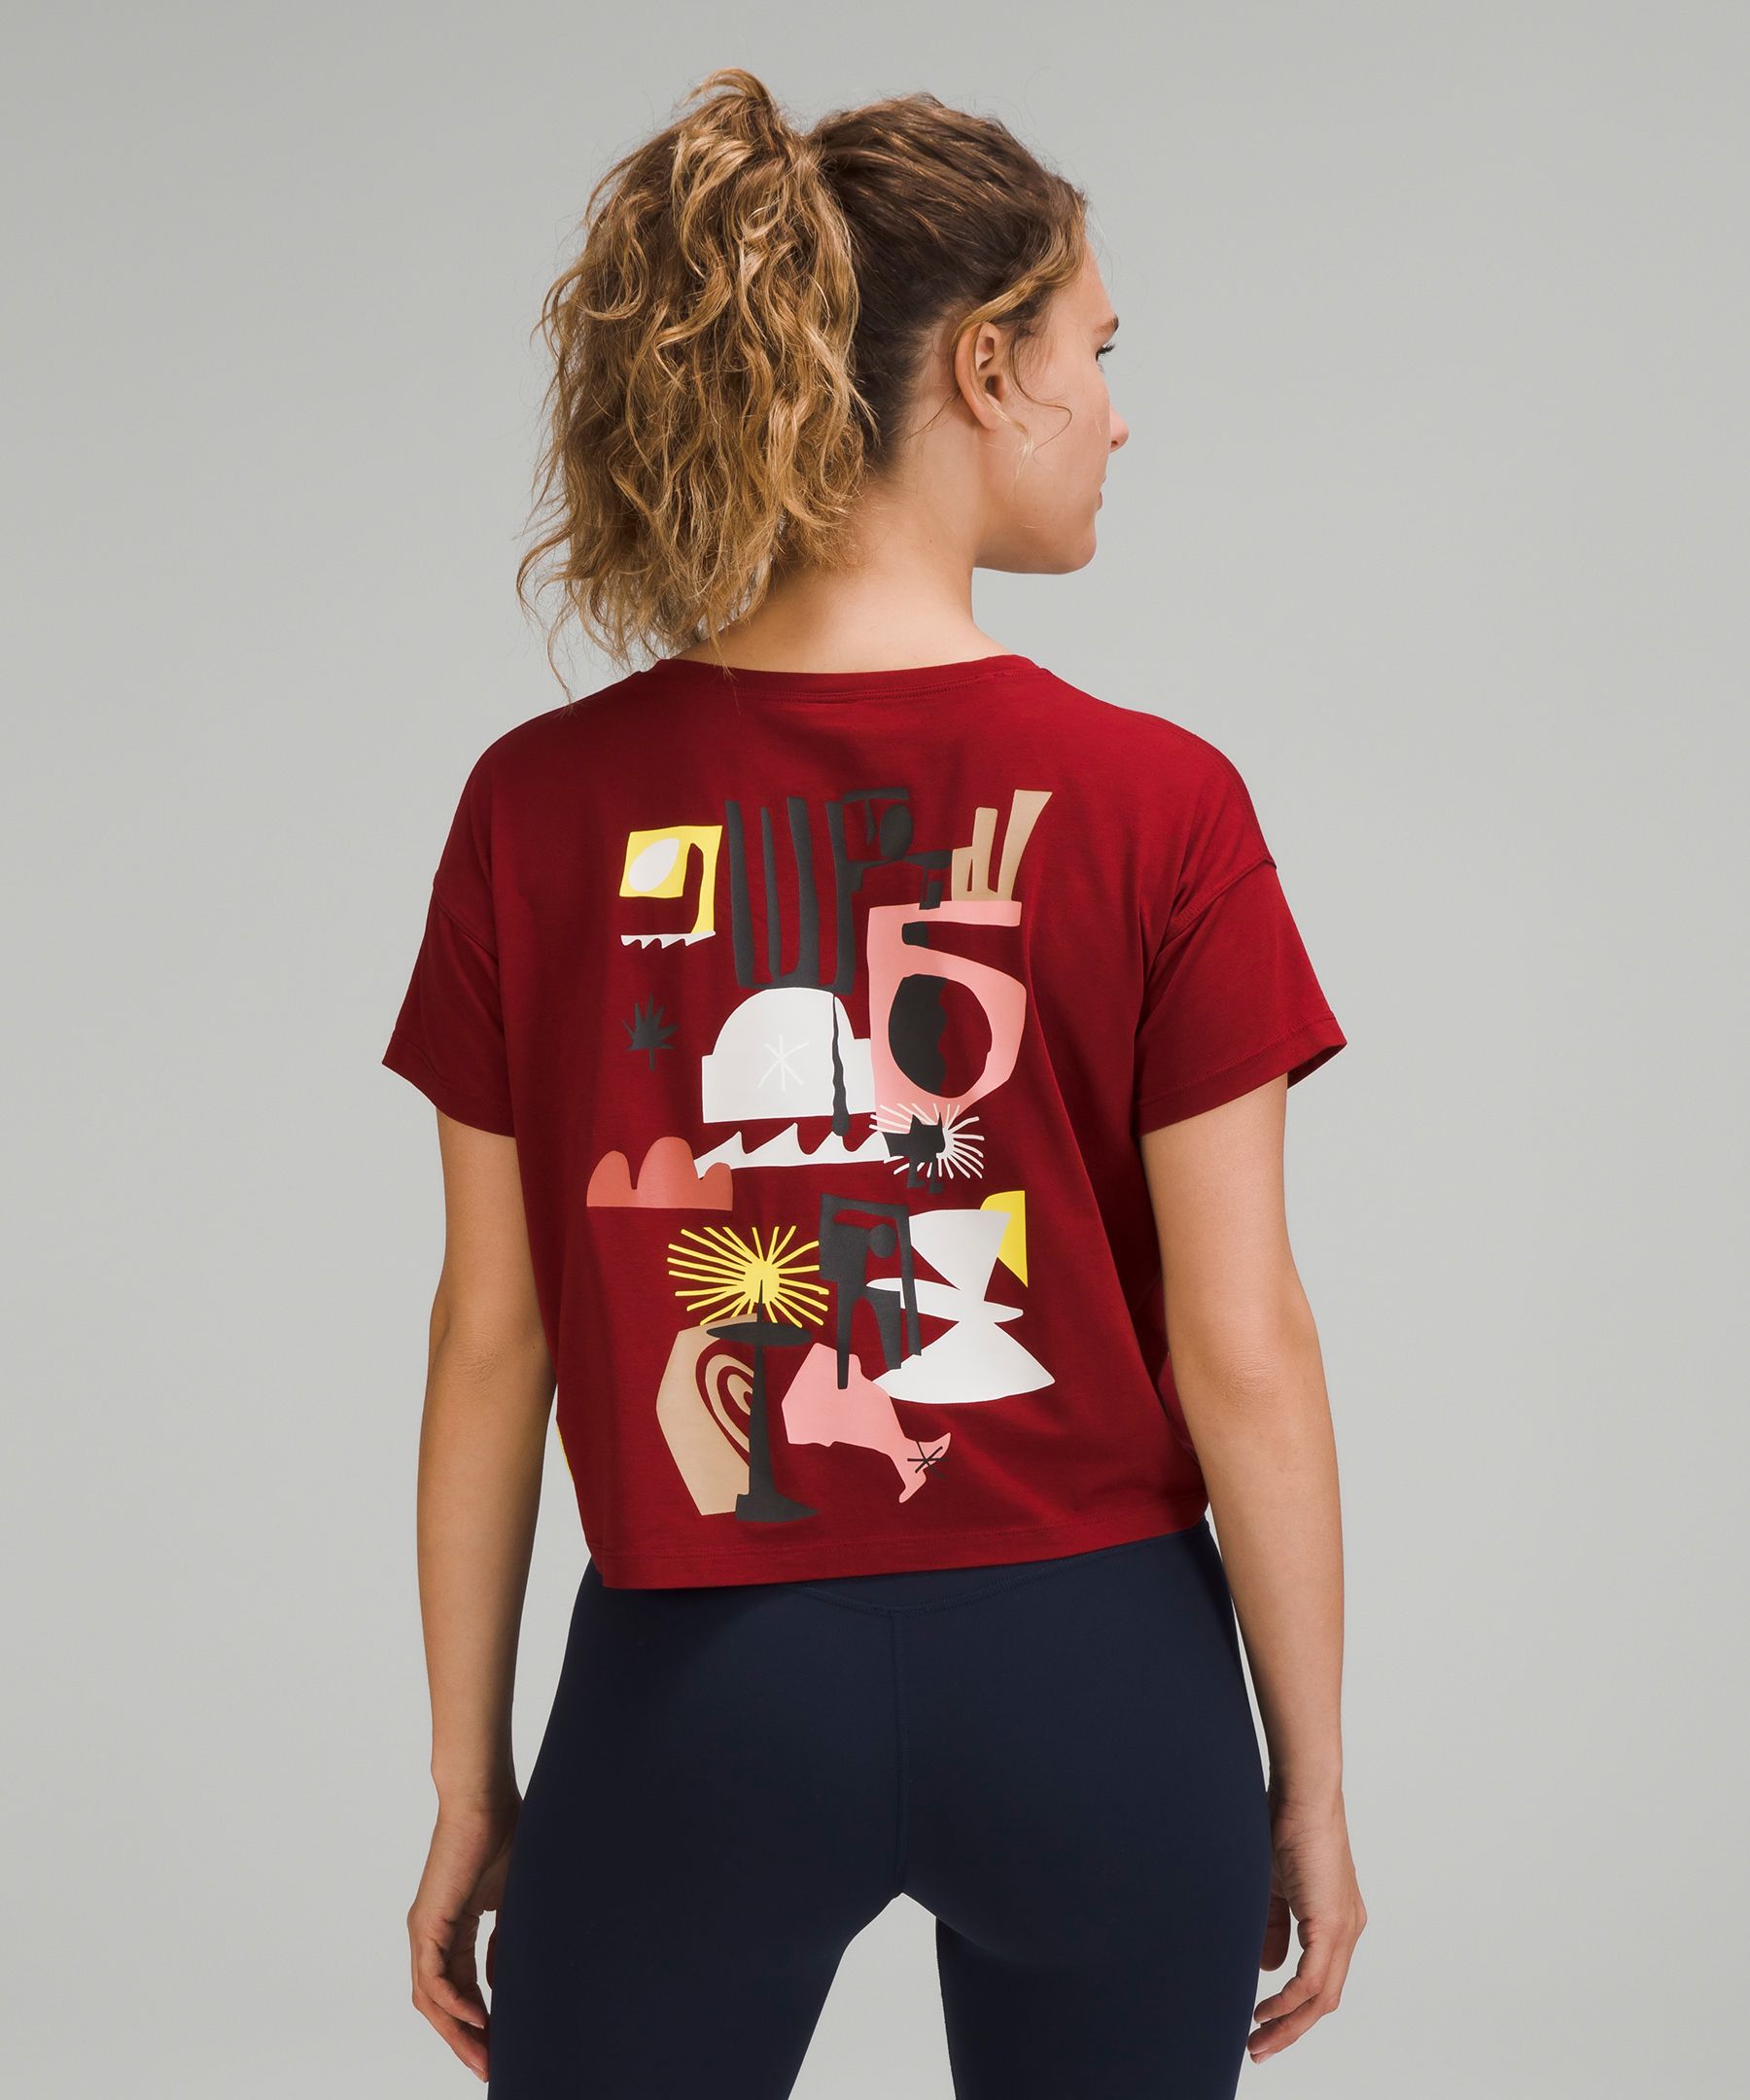 Lululemon Cates T-Shirt Size 4? Love Red Cropped Crewneck Pima Cotton